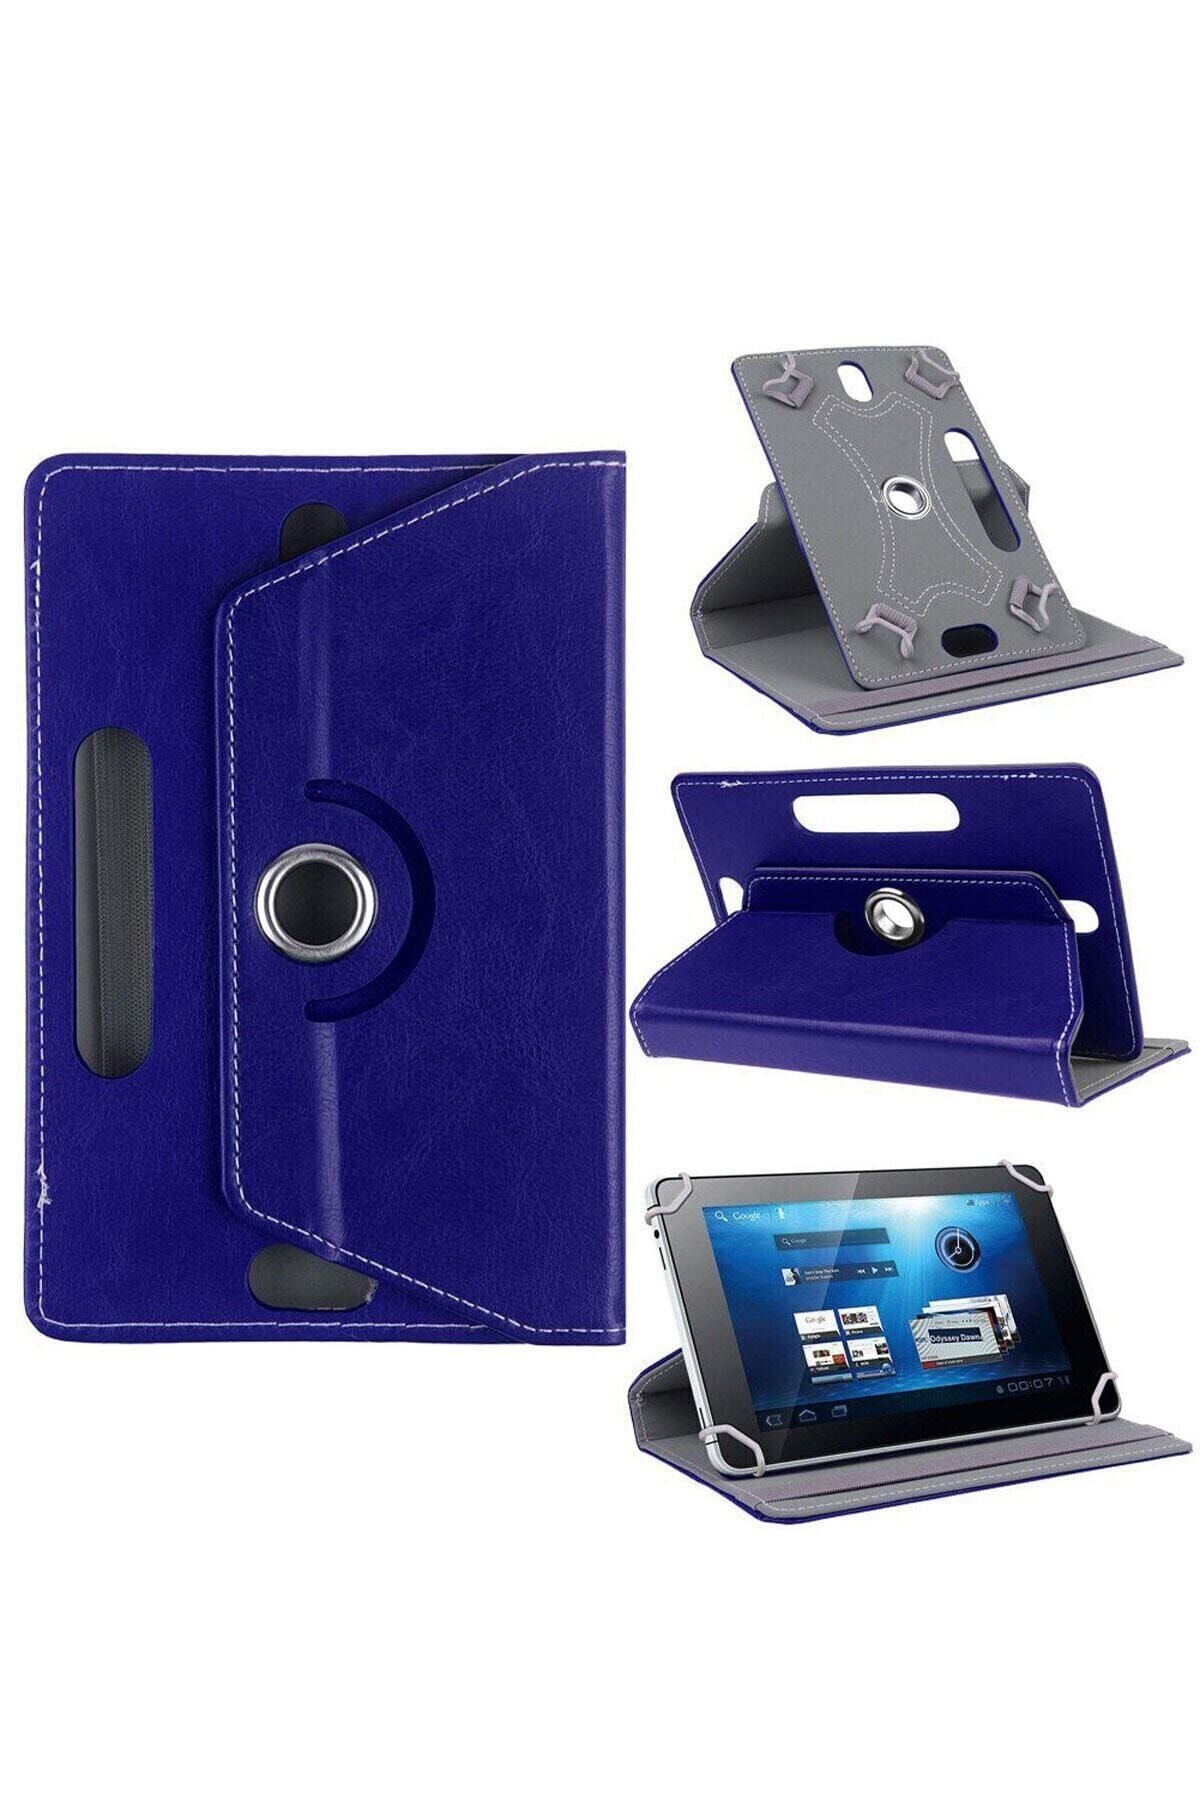 Evdeka Tcl Tab 10 S 10.1 Inç Uyumlu Lacivert Universal Stand Olabilen Tablet Kılıfı